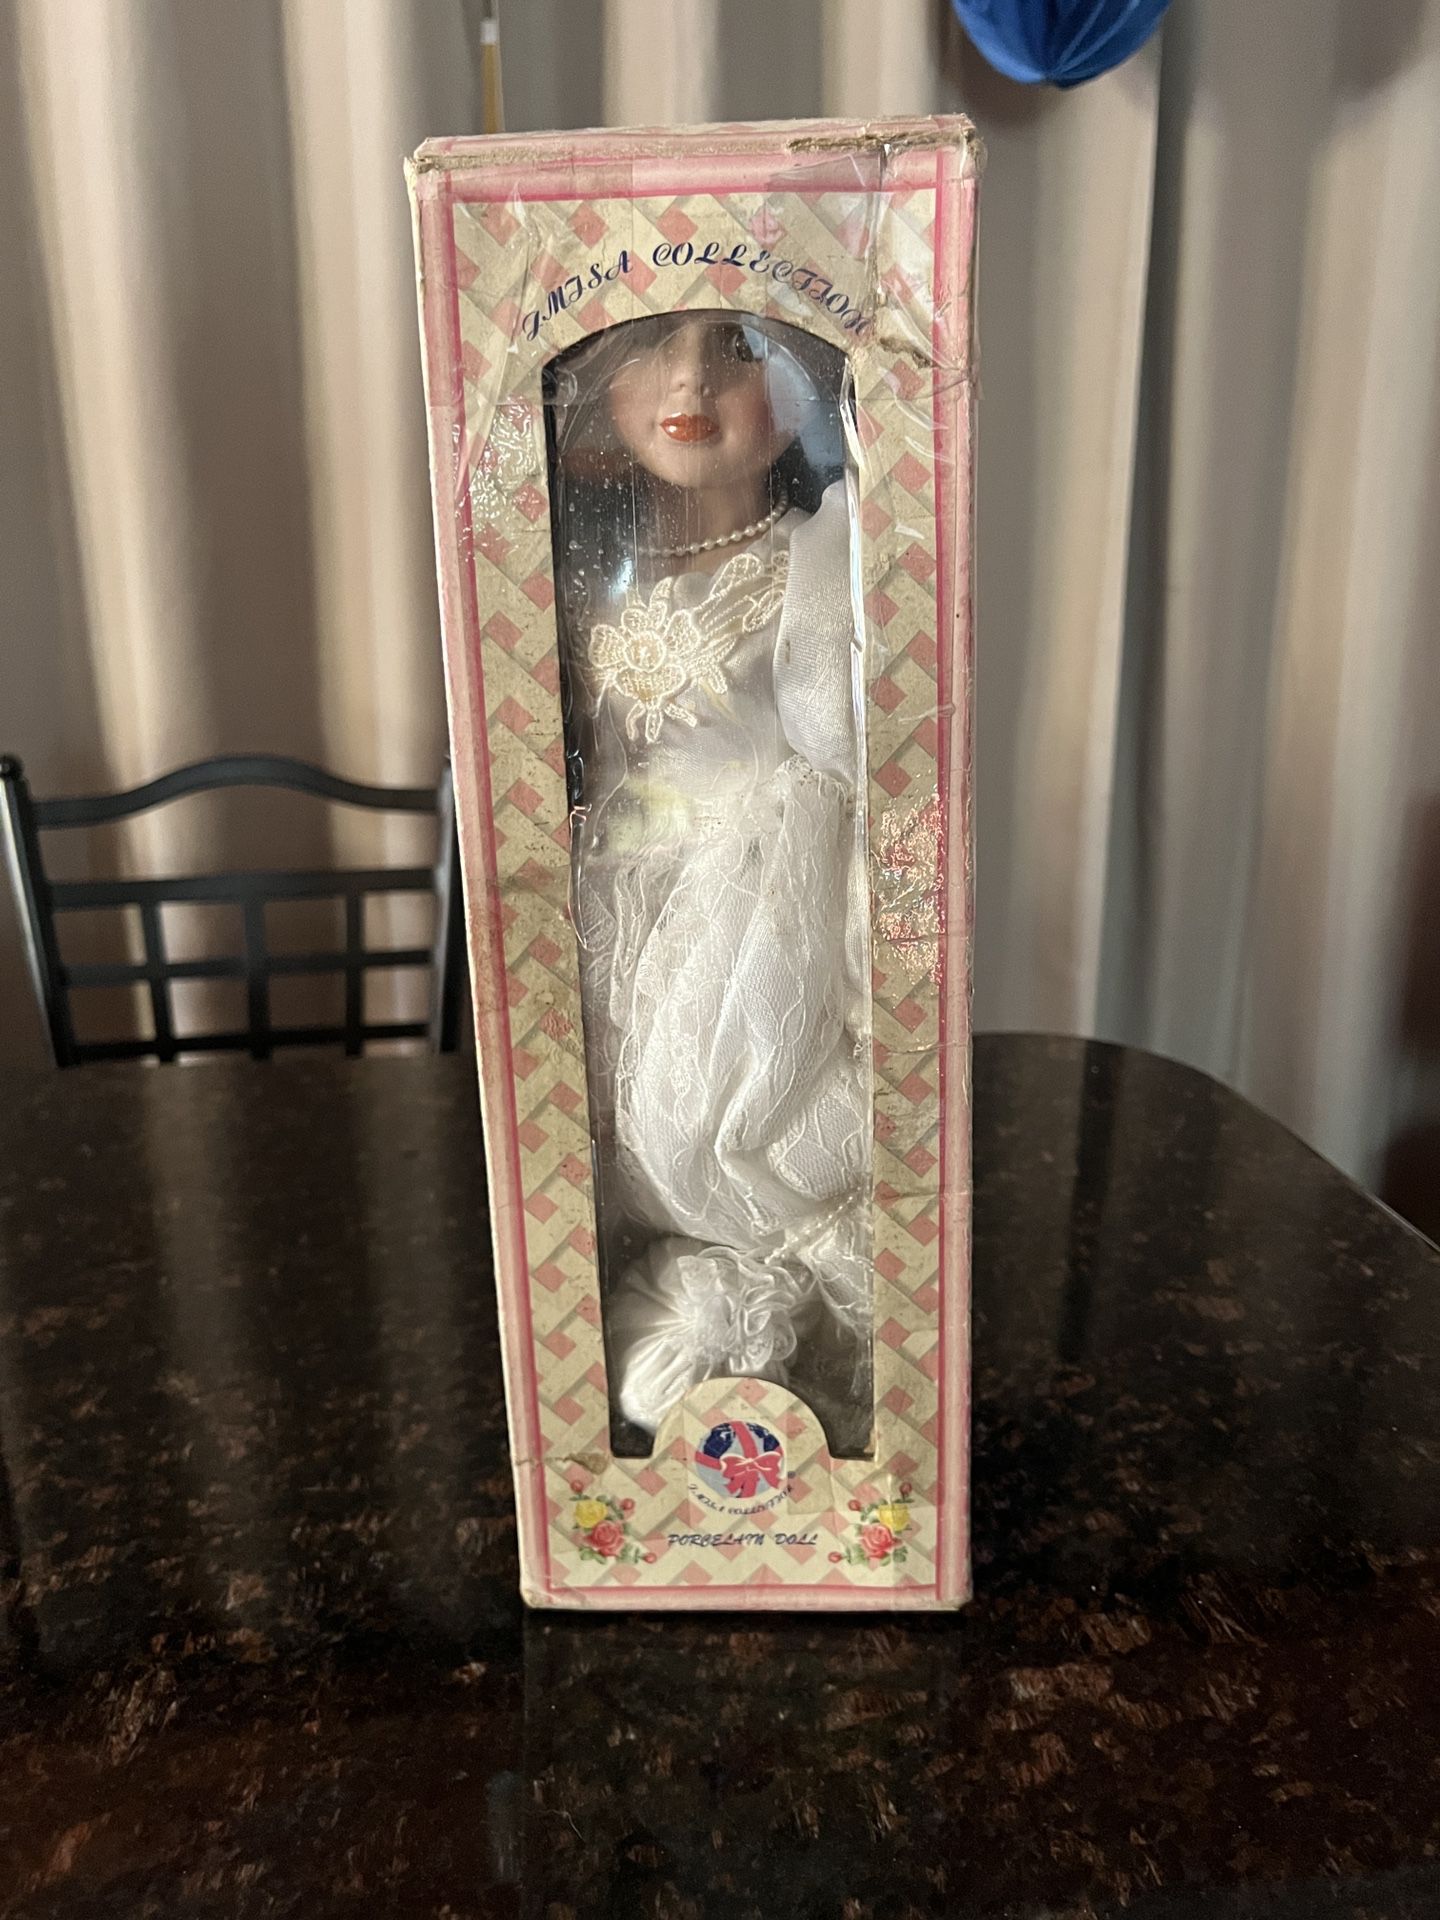 Porcelain Wedding Doll